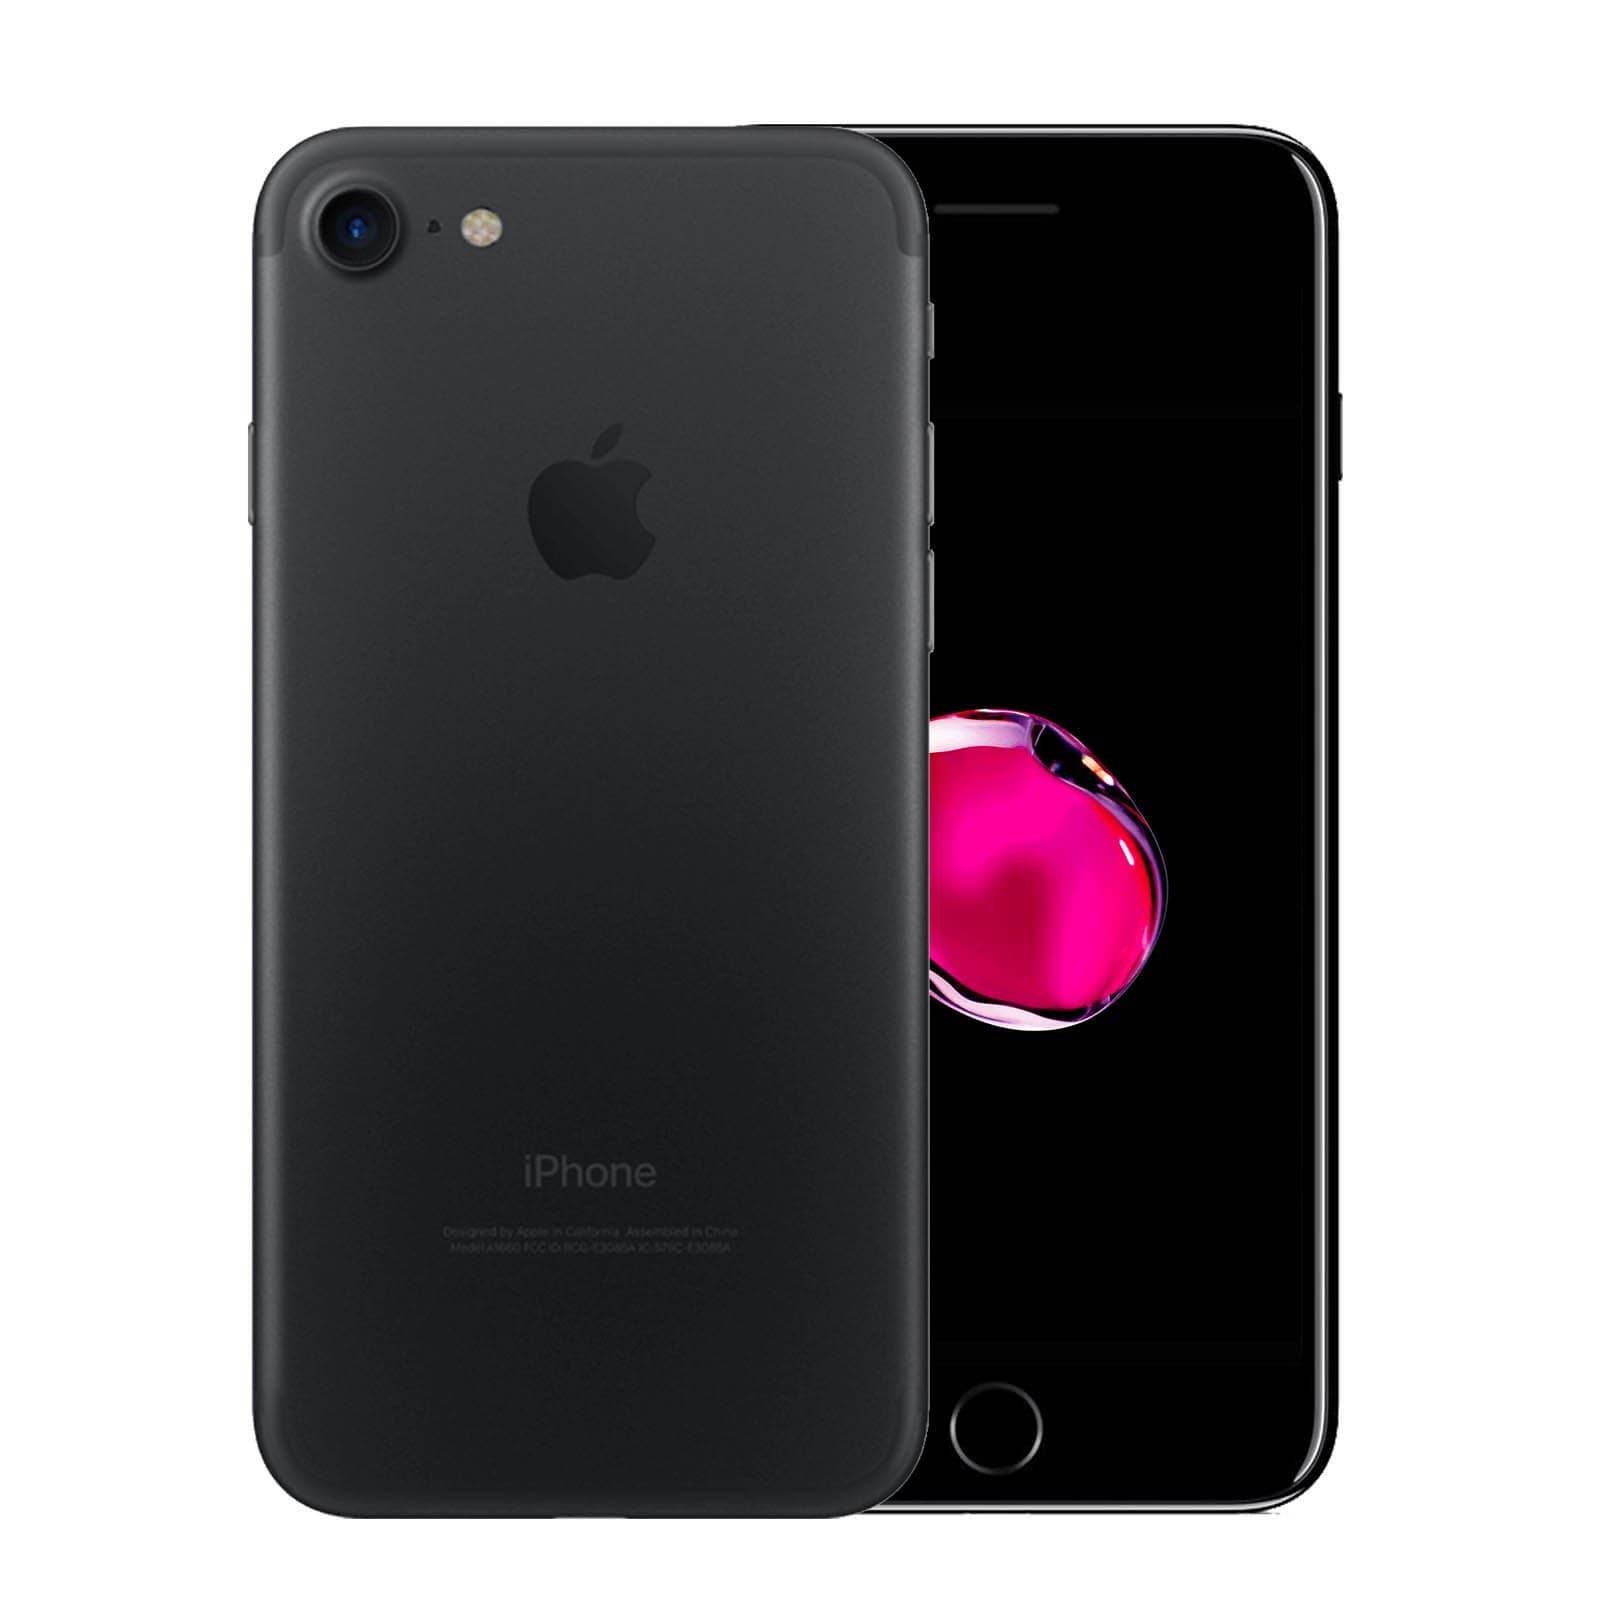 Apple iPhone 7 32GB Black Pristine - Unlocked 32GB Black Pristine